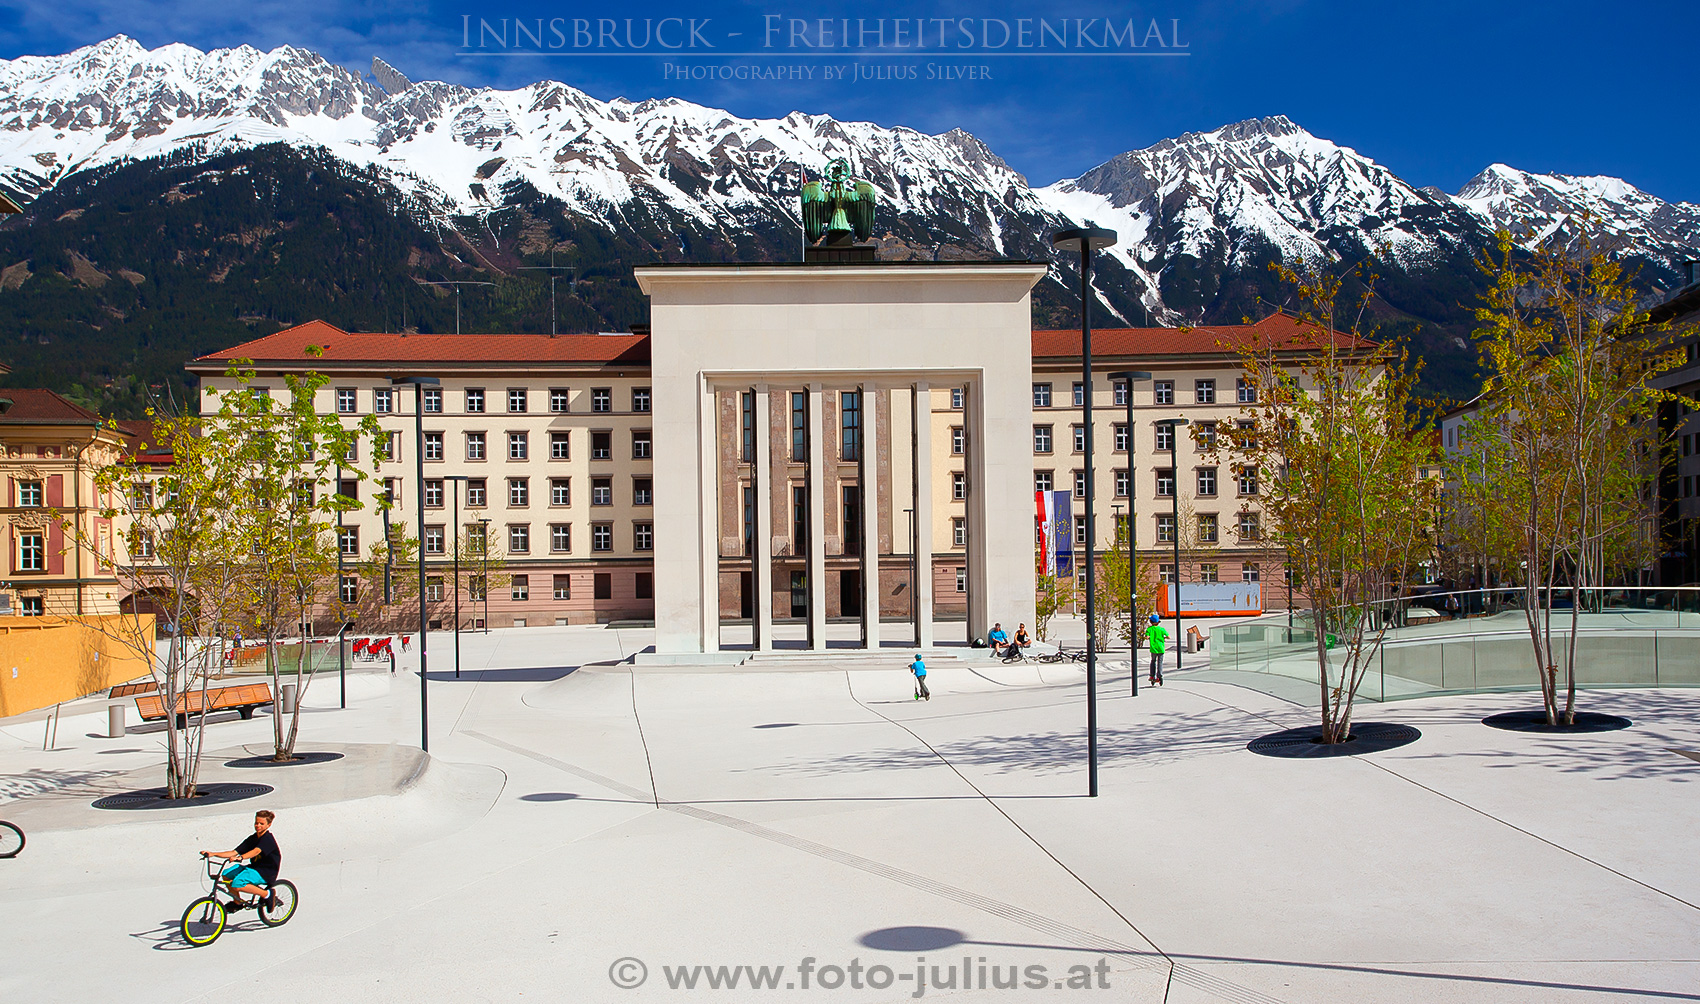 Innsbruck_018a_Freiheitsdenkmal.jpg, 986kB